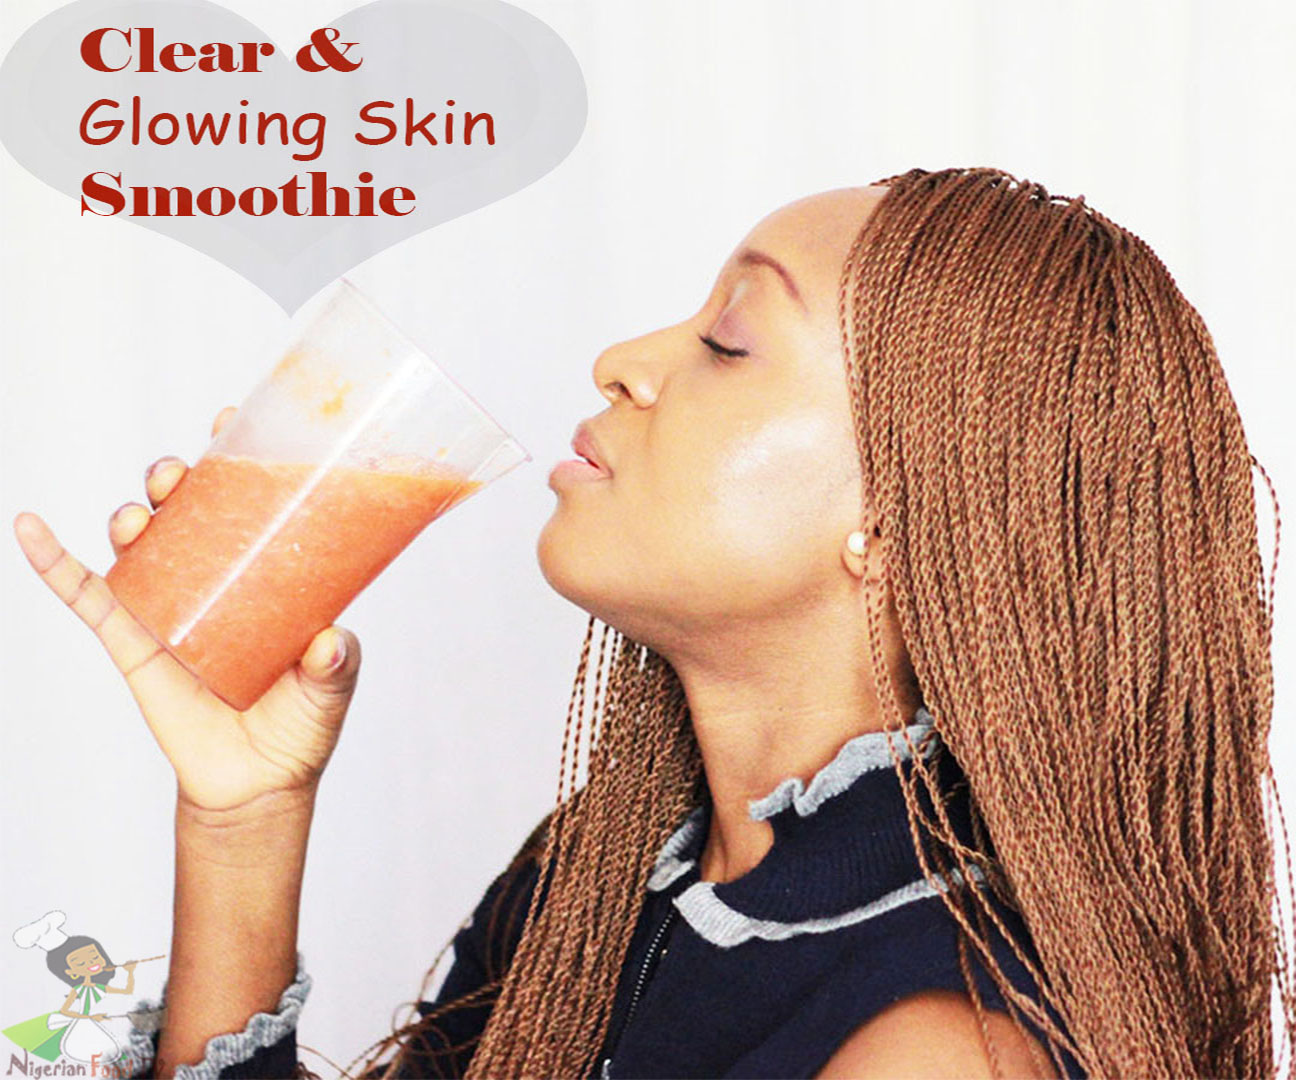 Skin Glowing Smoothie: Get Clear Skin in 5 days